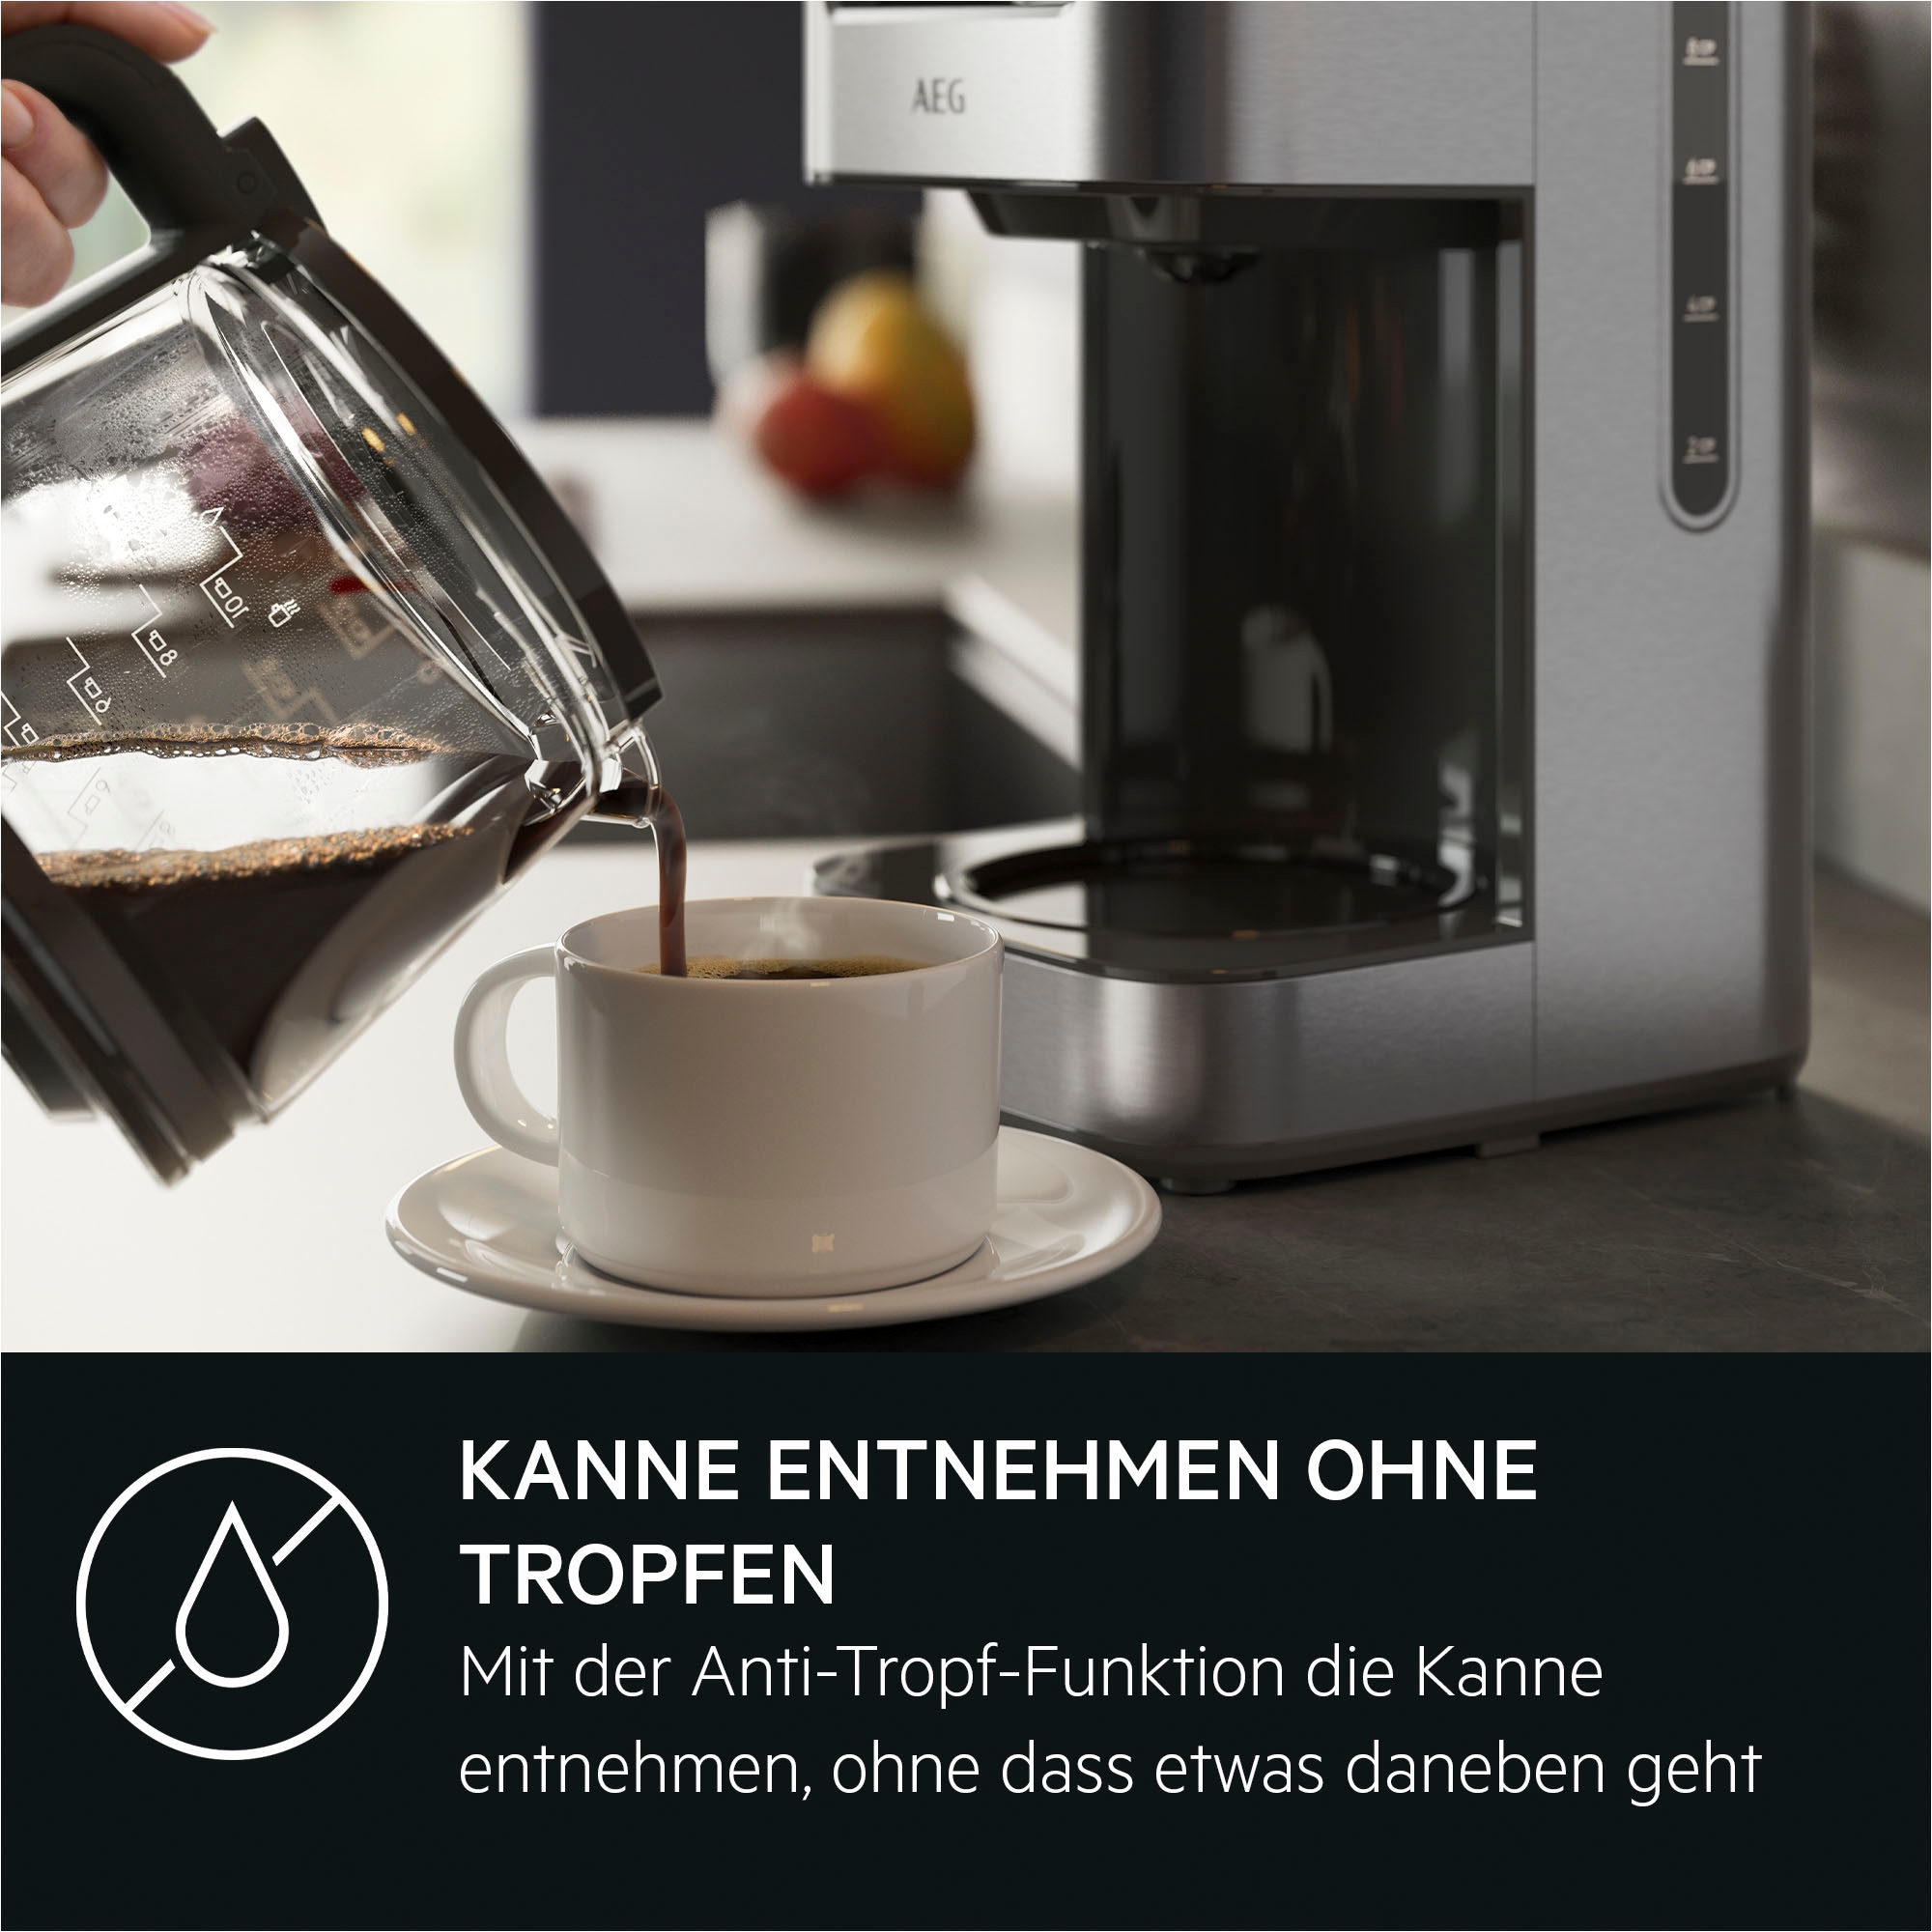 AEG Filterkaffeemaschine »Gourmet 6 CM5-1-6ST«, 1,25 l Kaffeekanne, Korbfilter, 1x4